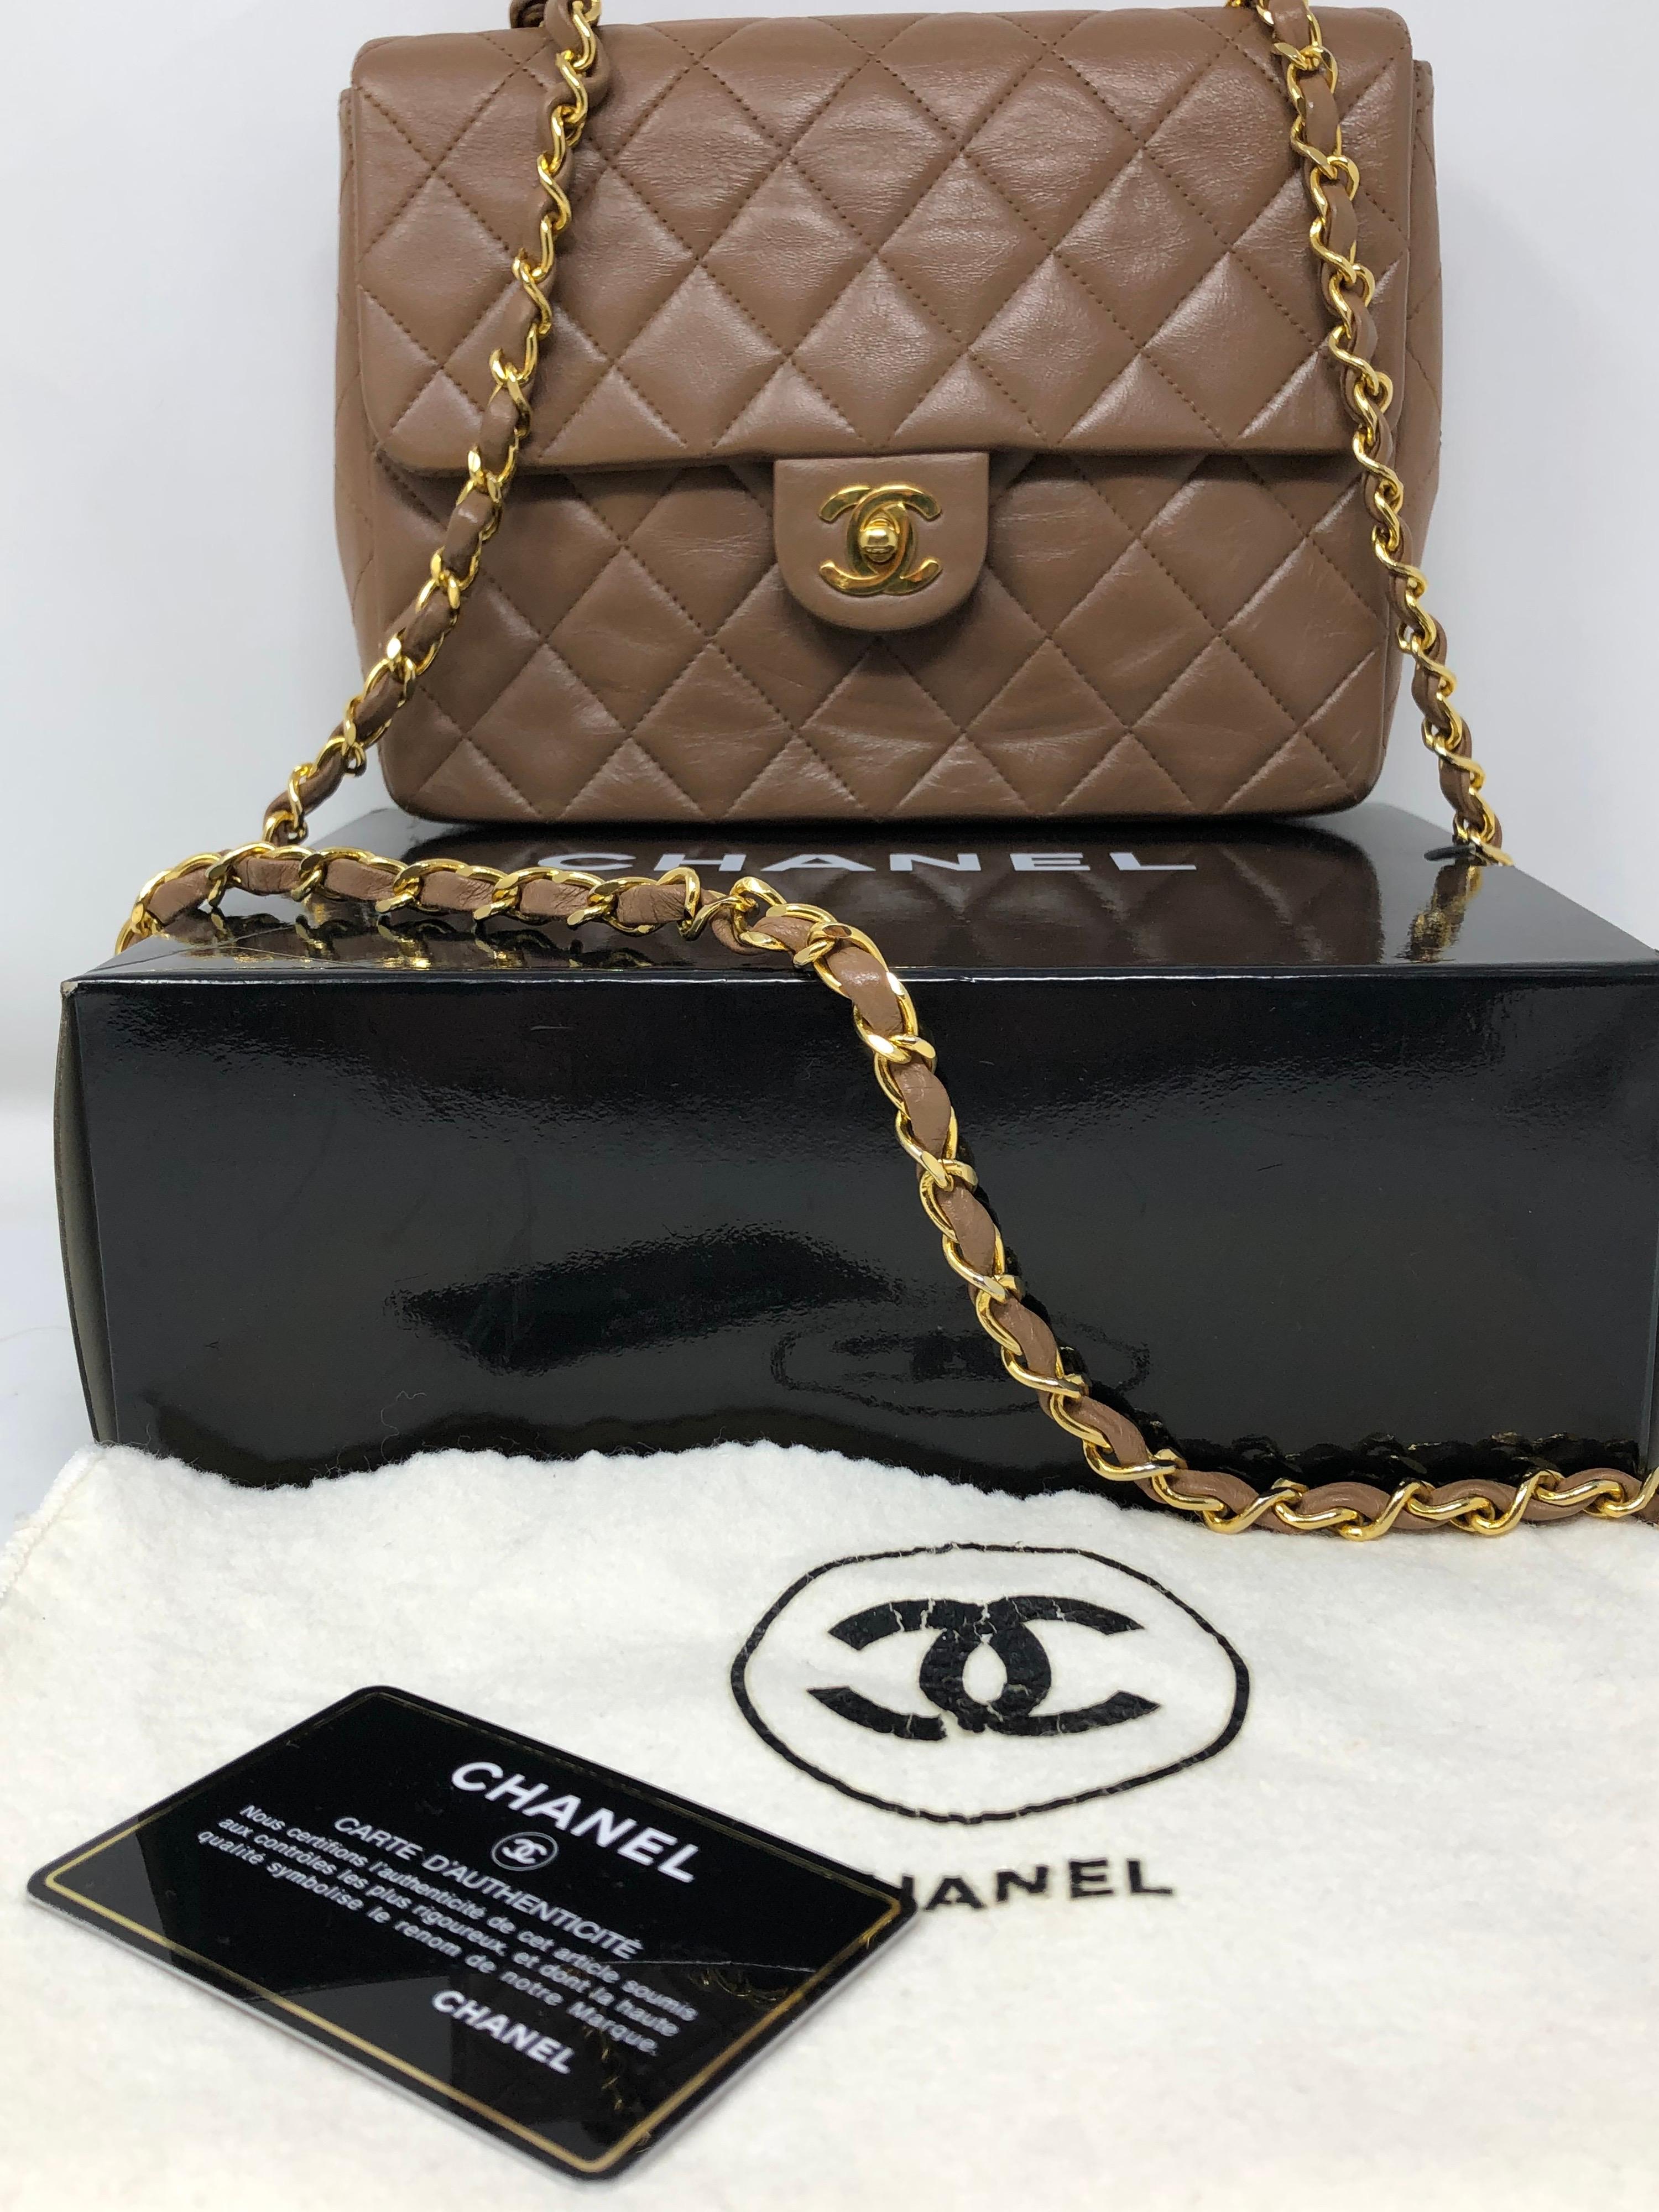 Chanel Tan Quilted Leather Shoulder Bag 1989-1991 1